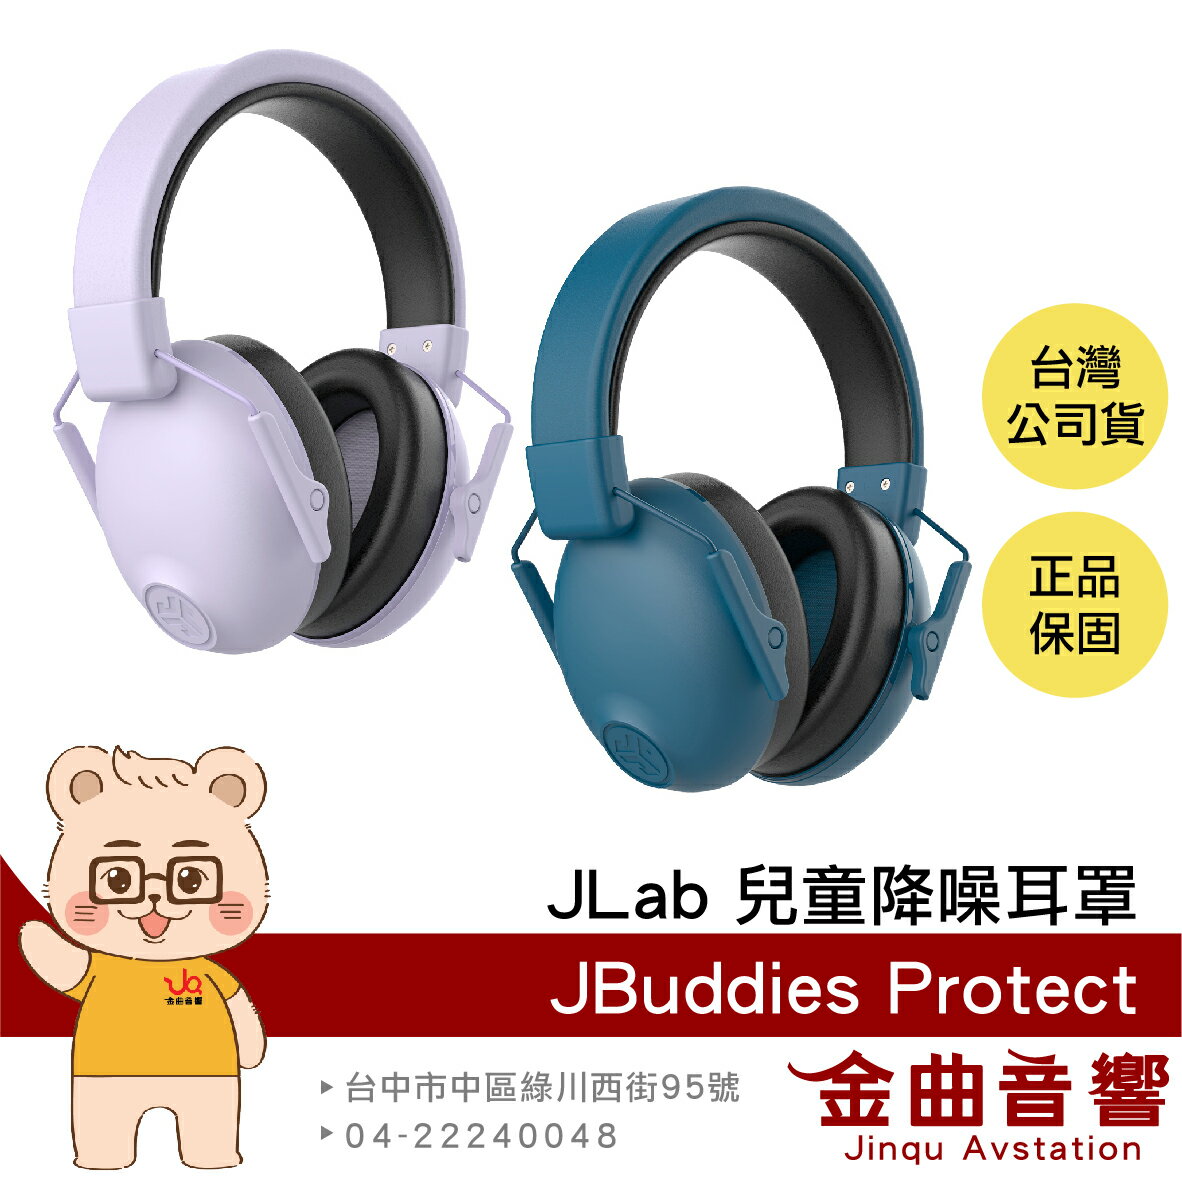 JLAB JBuddies Protect 降噪23dB 兒童 青少年 皆適用 可折疊 降噪耳罩 無音樂功能 | 金曲音響